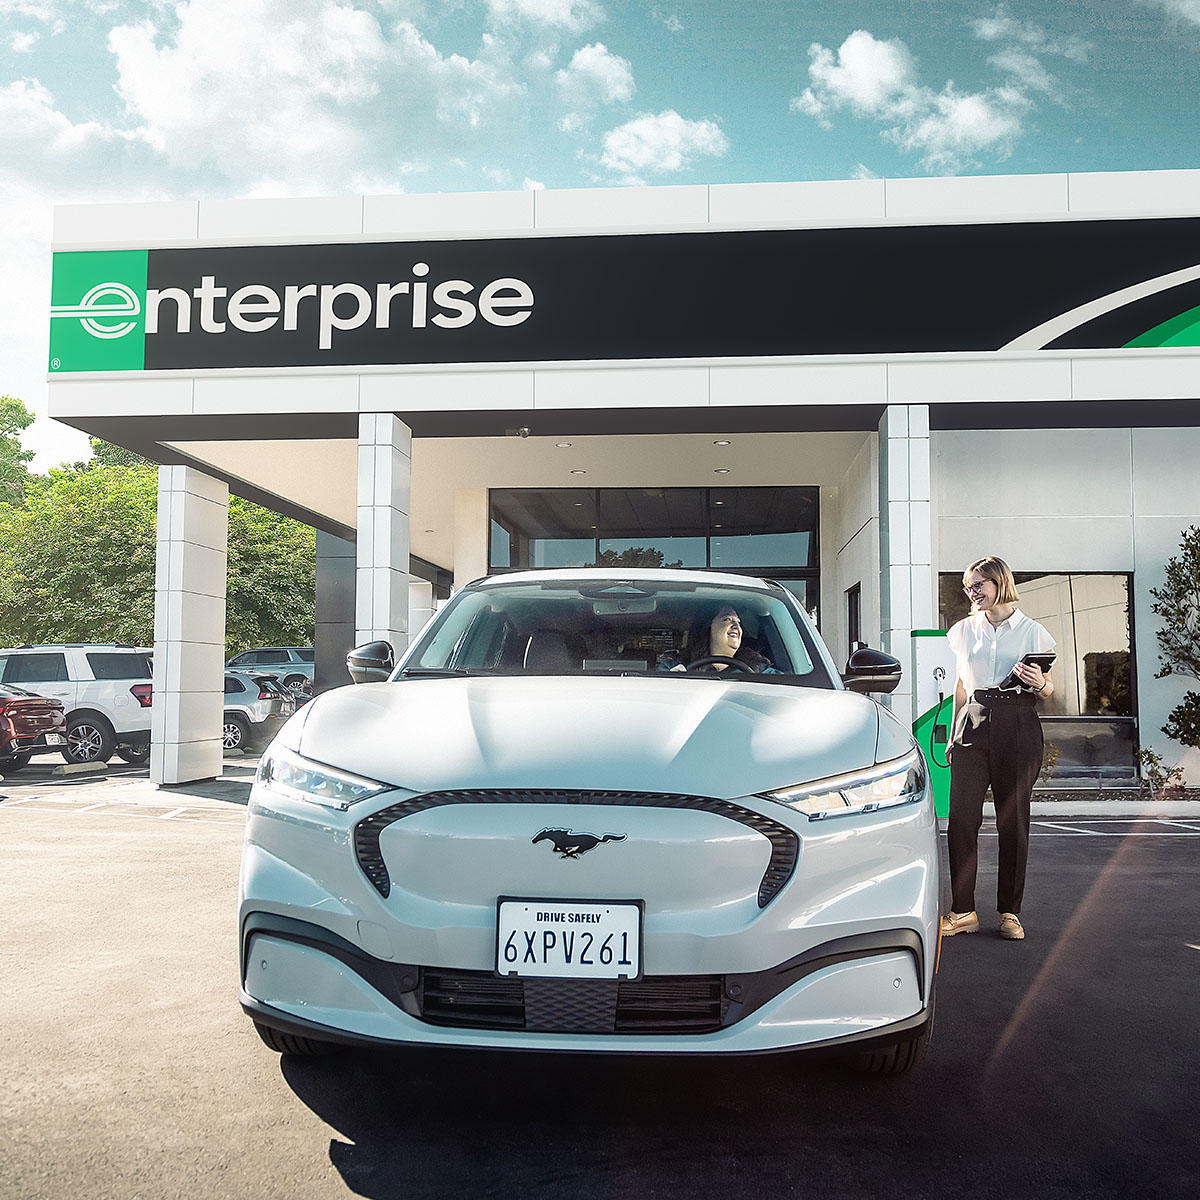 Enterprise Rent-A-Car à Saint-Hilaire: Enterprise employee helping customer with electric car rental